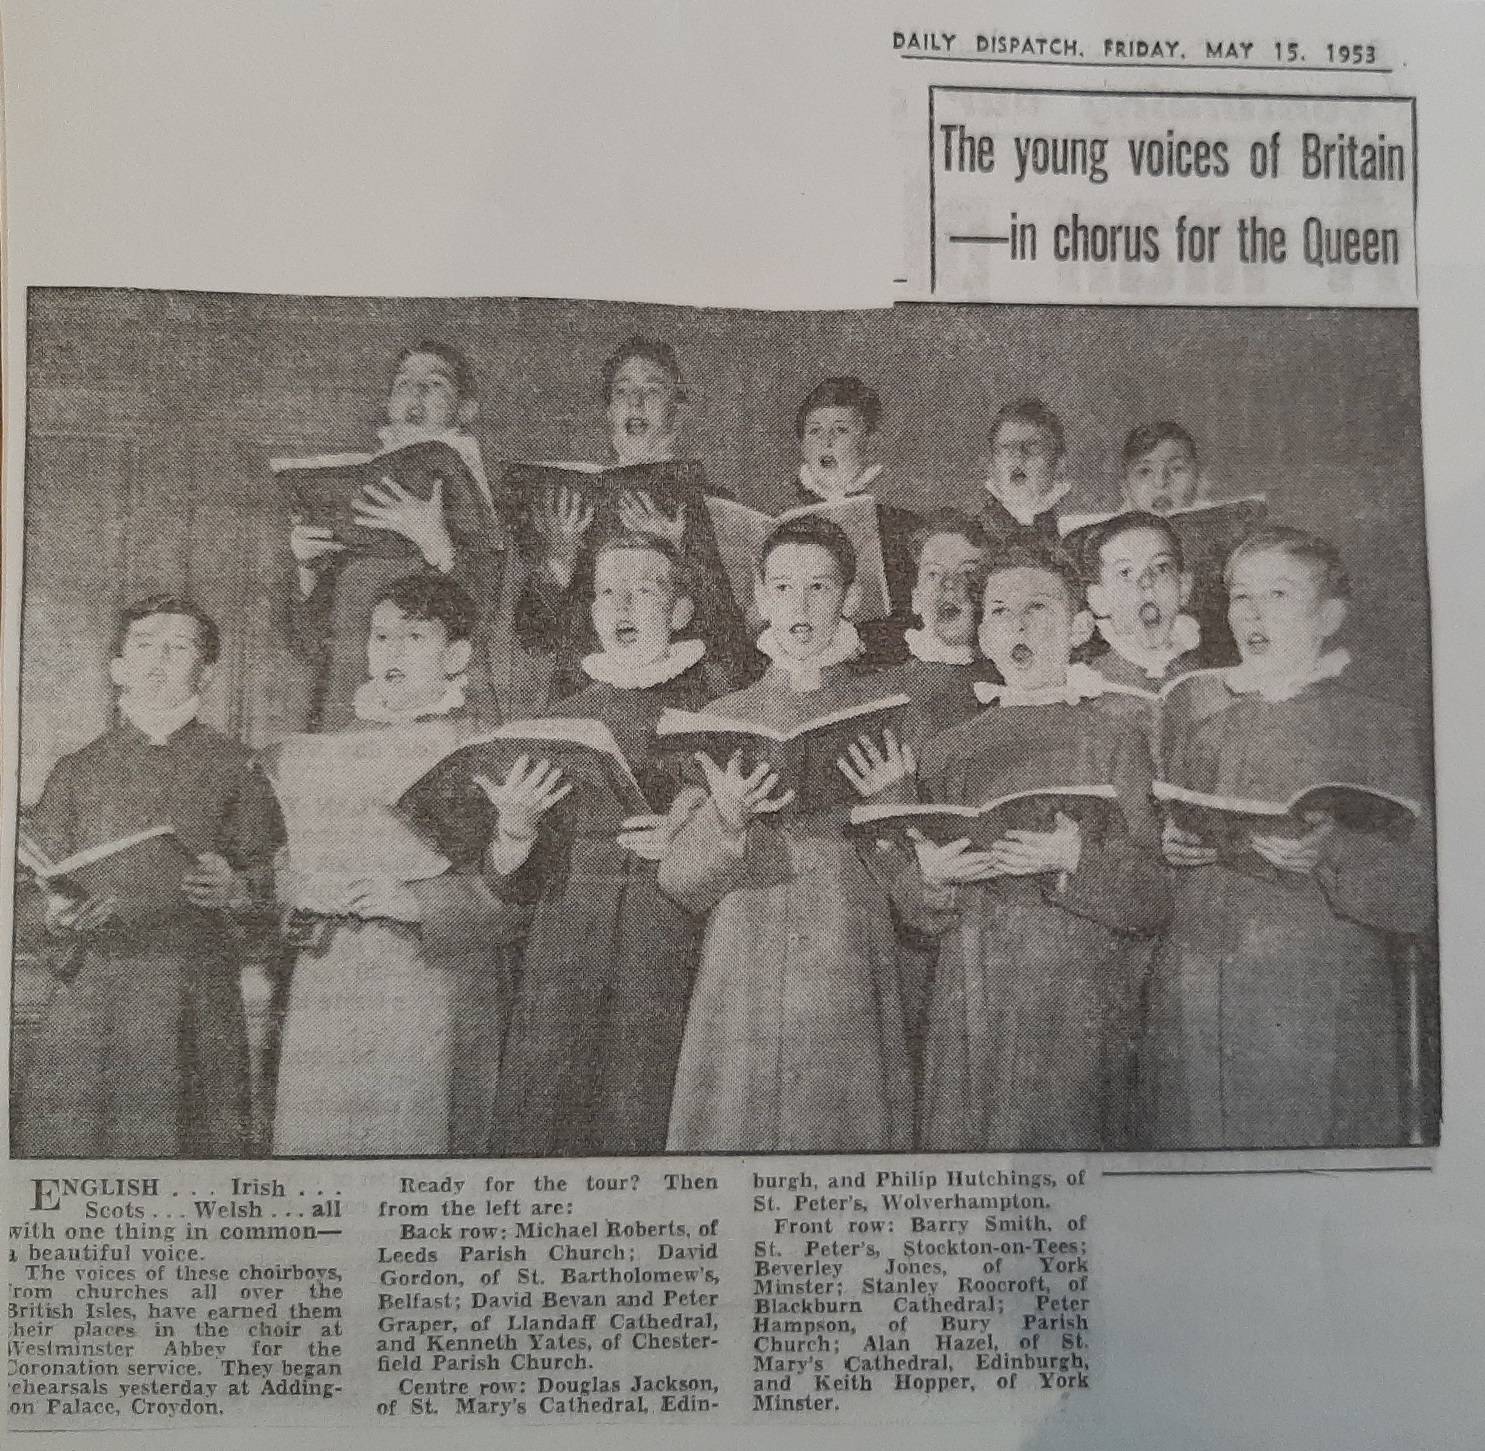 A press write-up focusing on the coronation choir